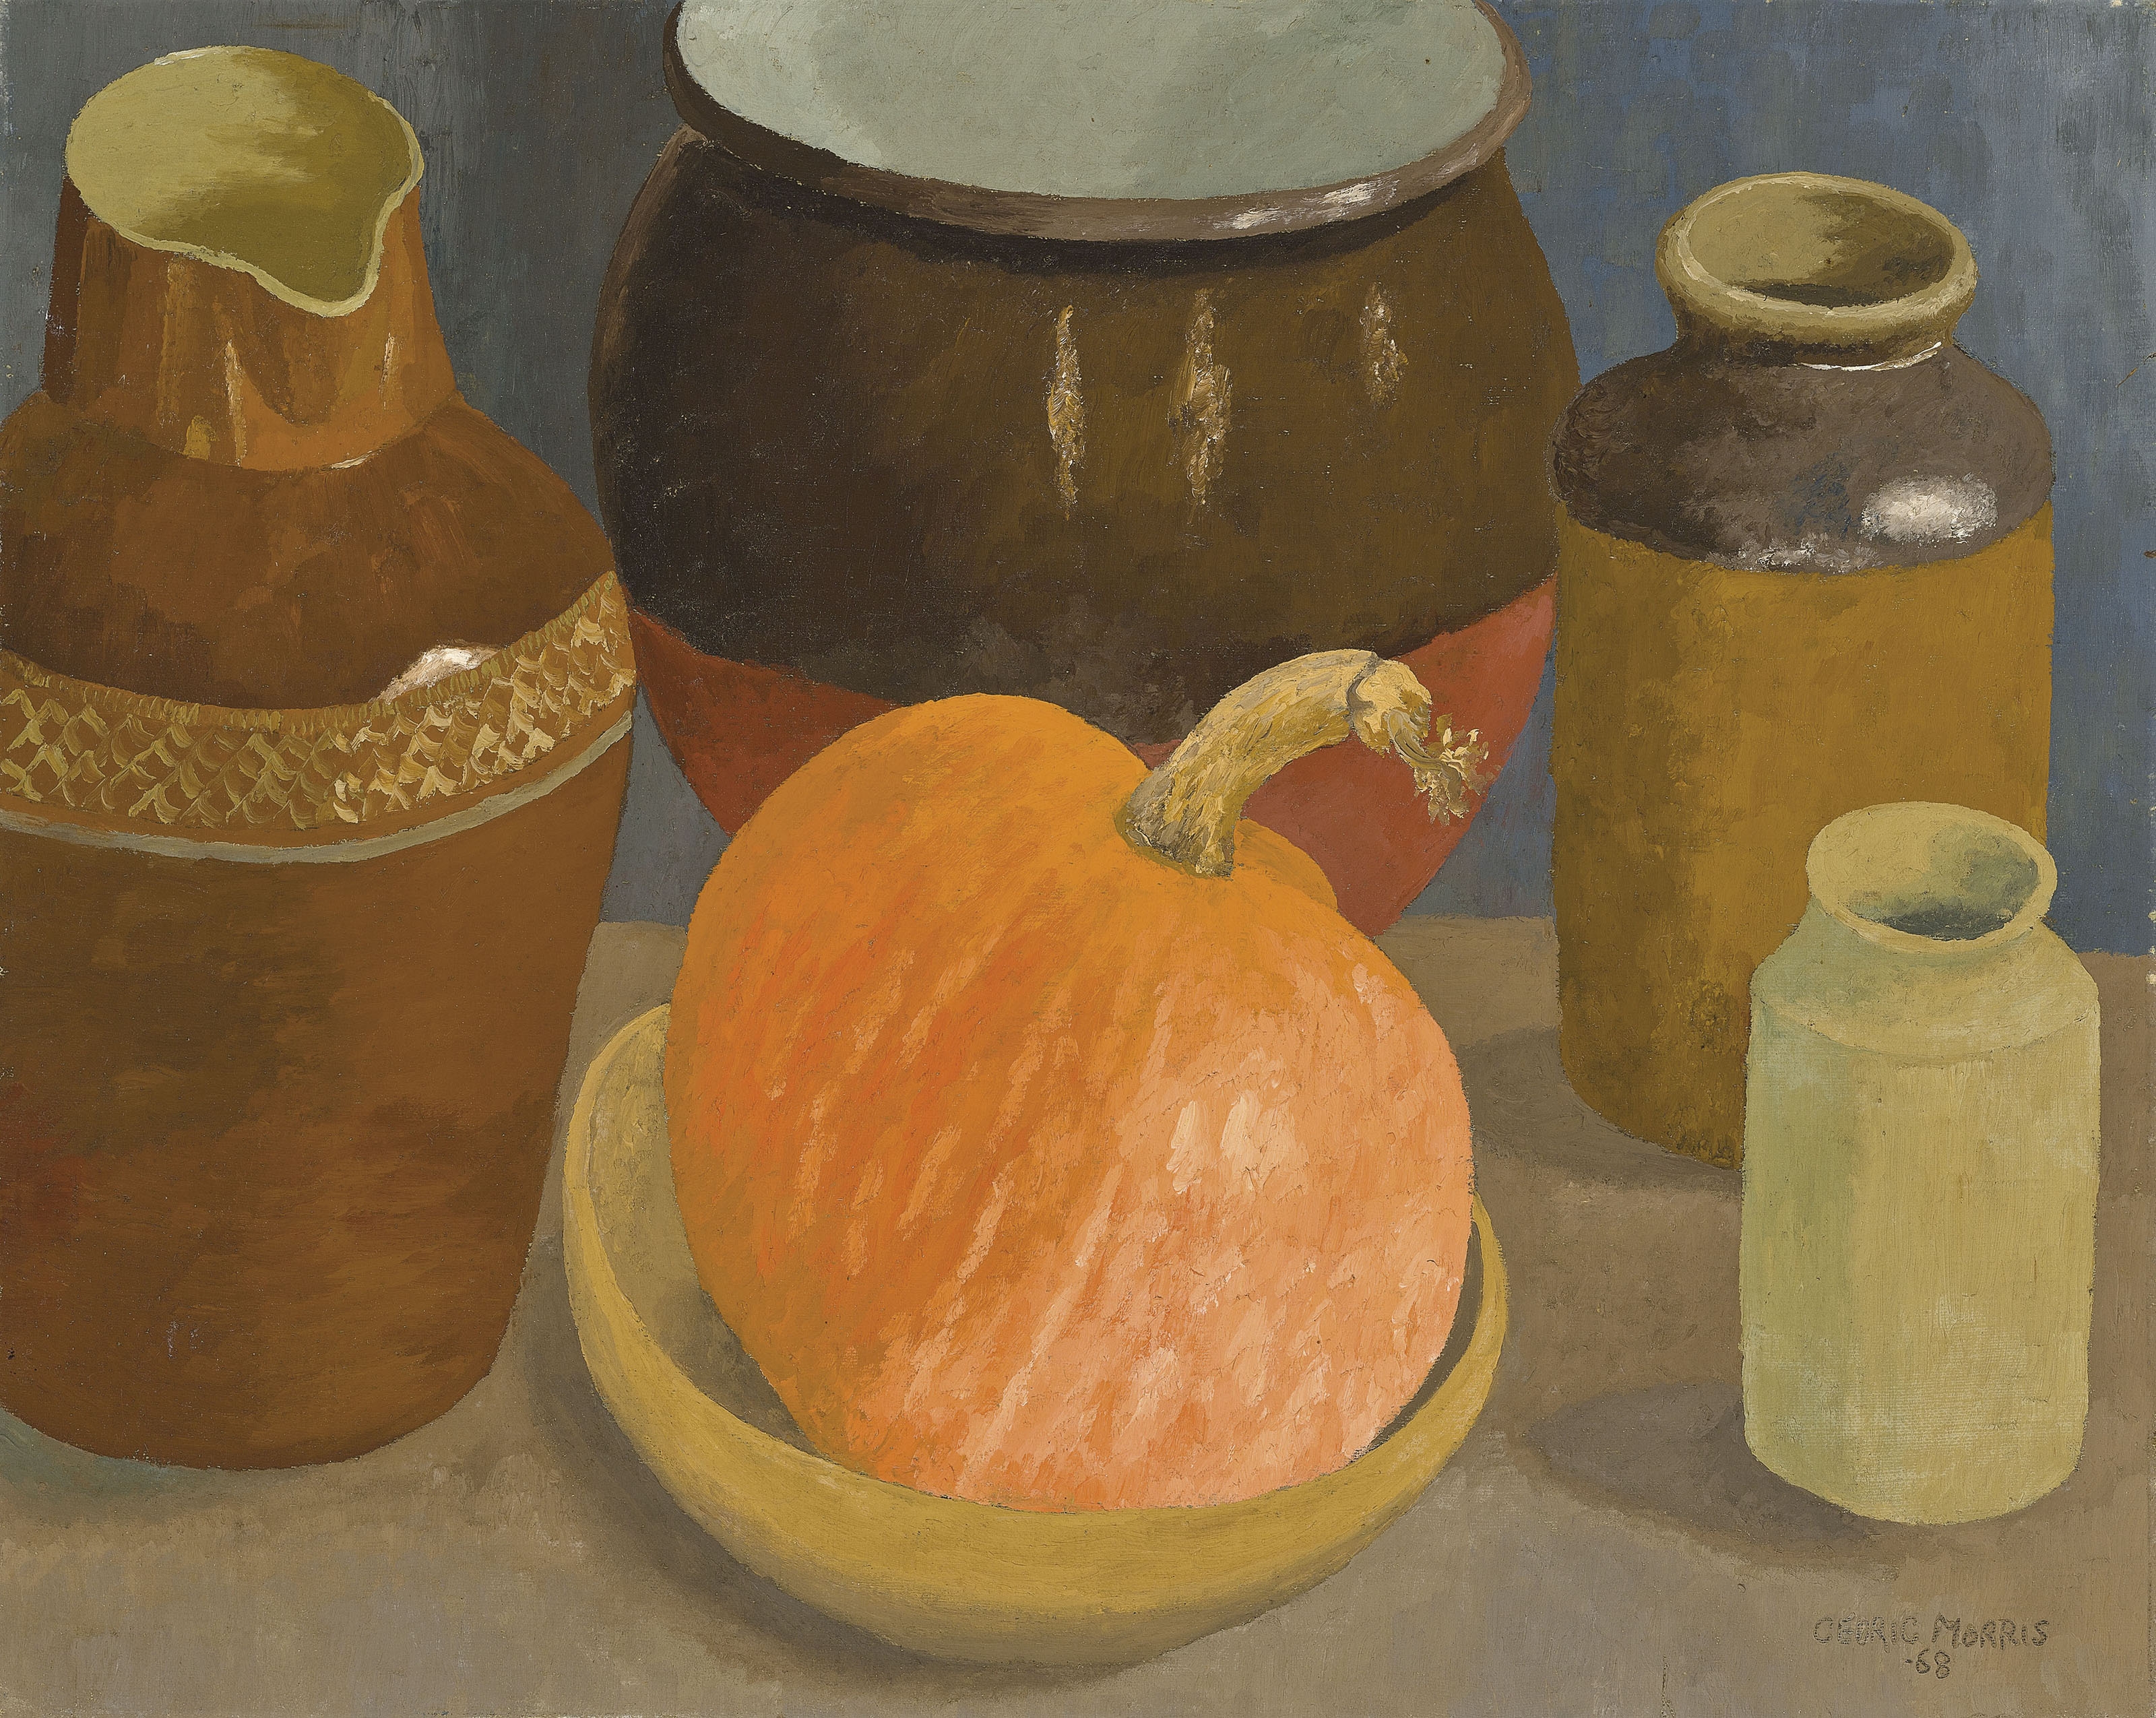 Pumpkin and Pots by Sir Cedric Morris, 1968